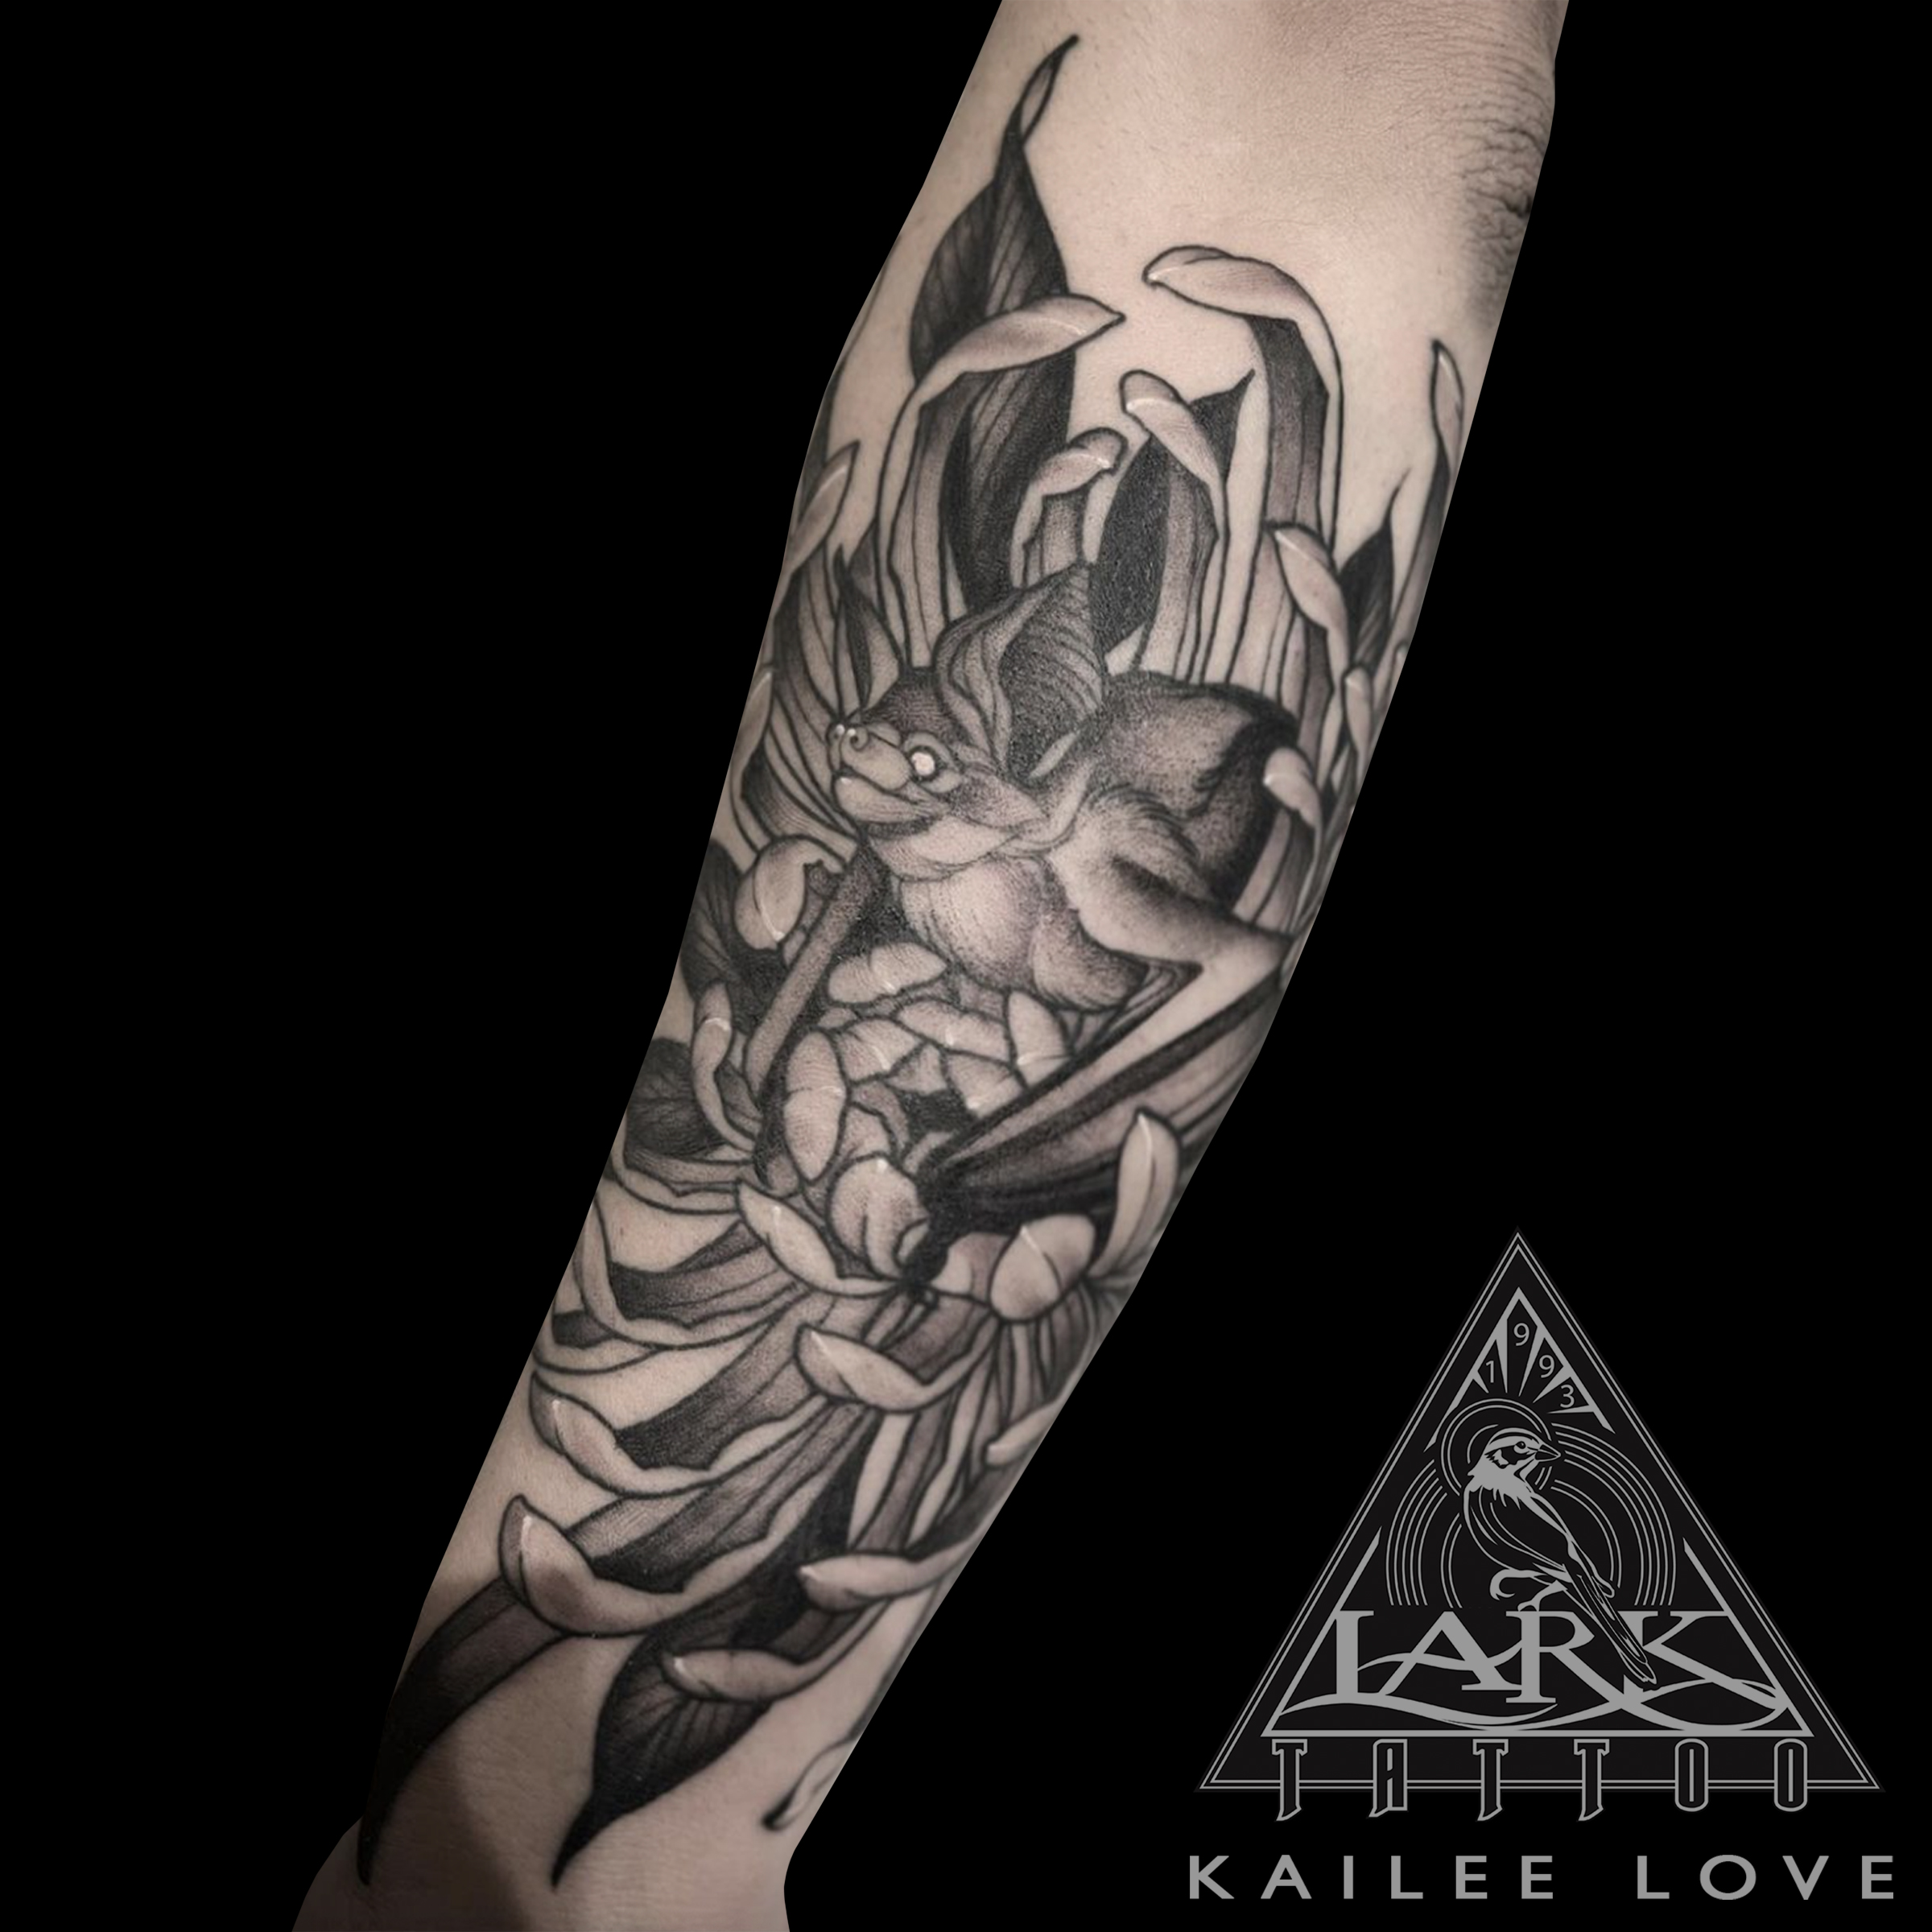 New tattoo uploaded to Kailee Love's portfolio 2/22/22 - -